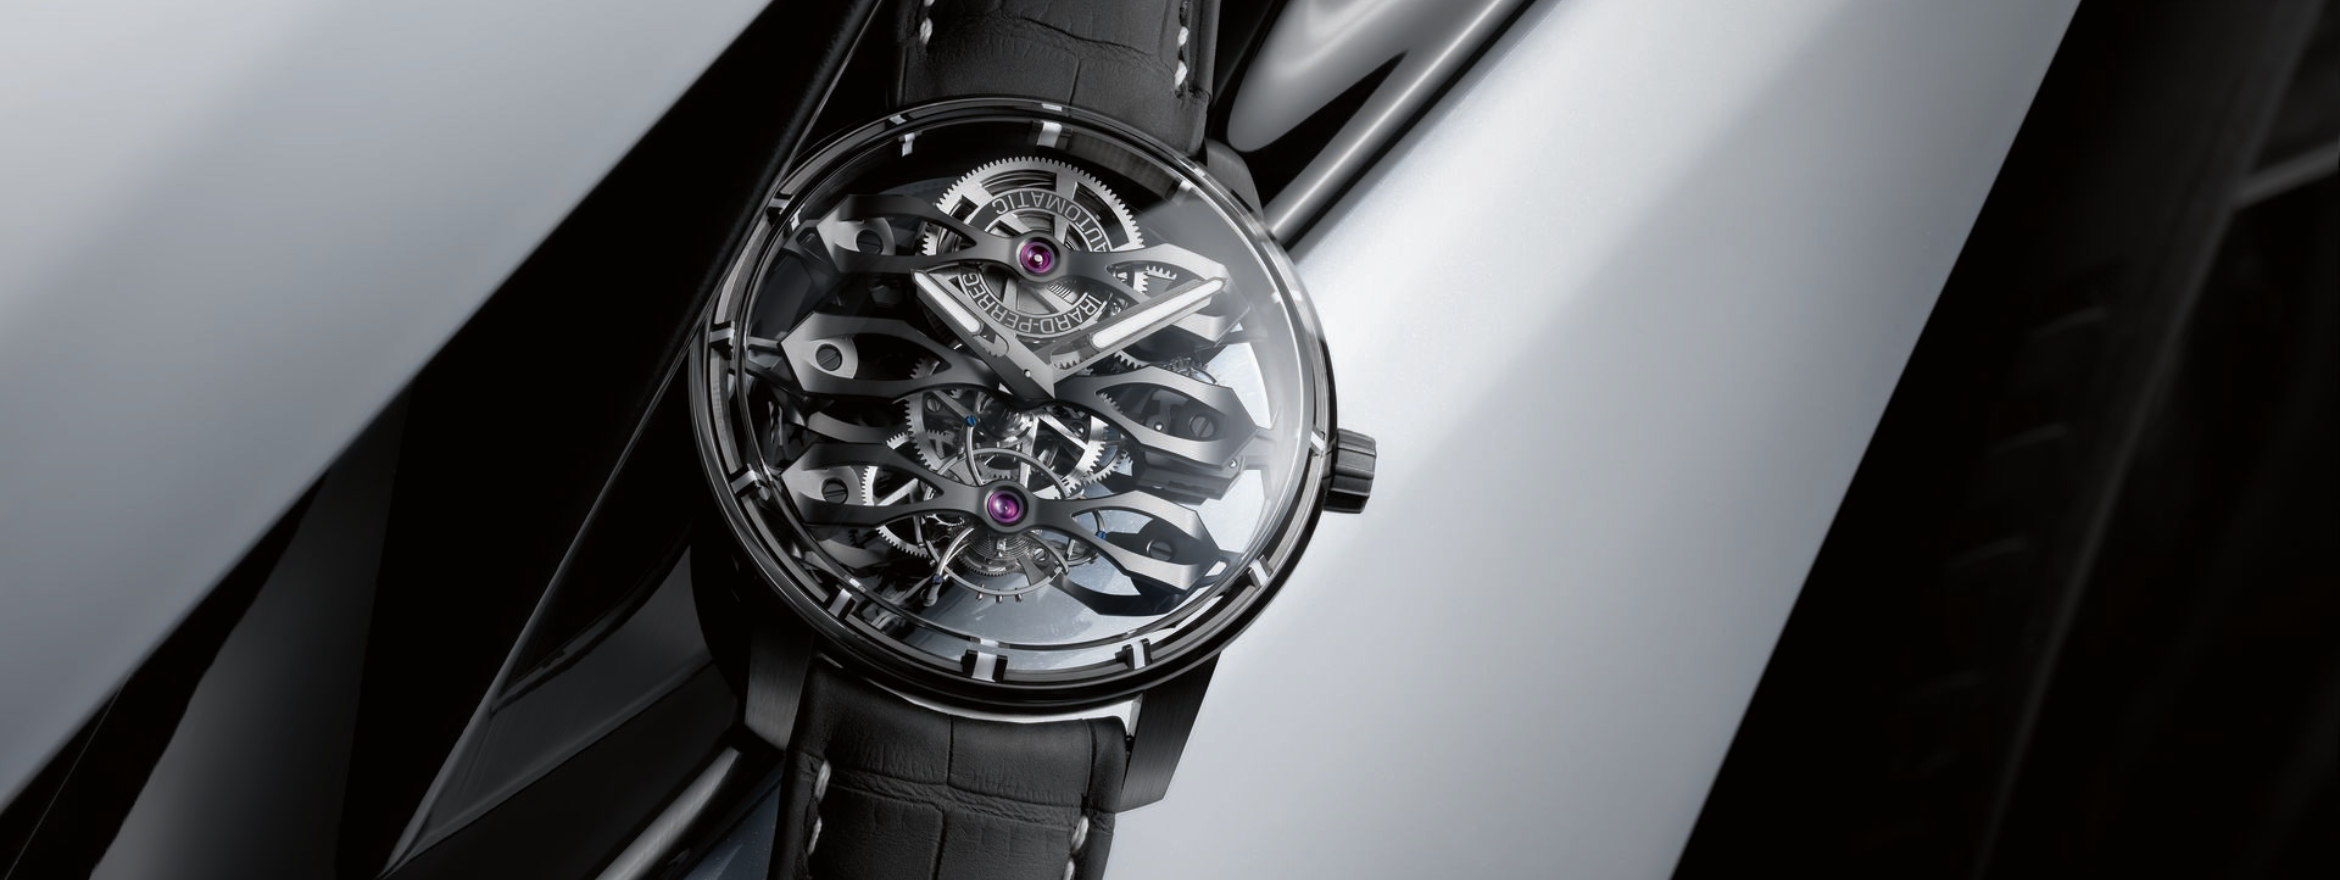 Girard-Perregaux & Aston Martin Launch Collaborative Watch